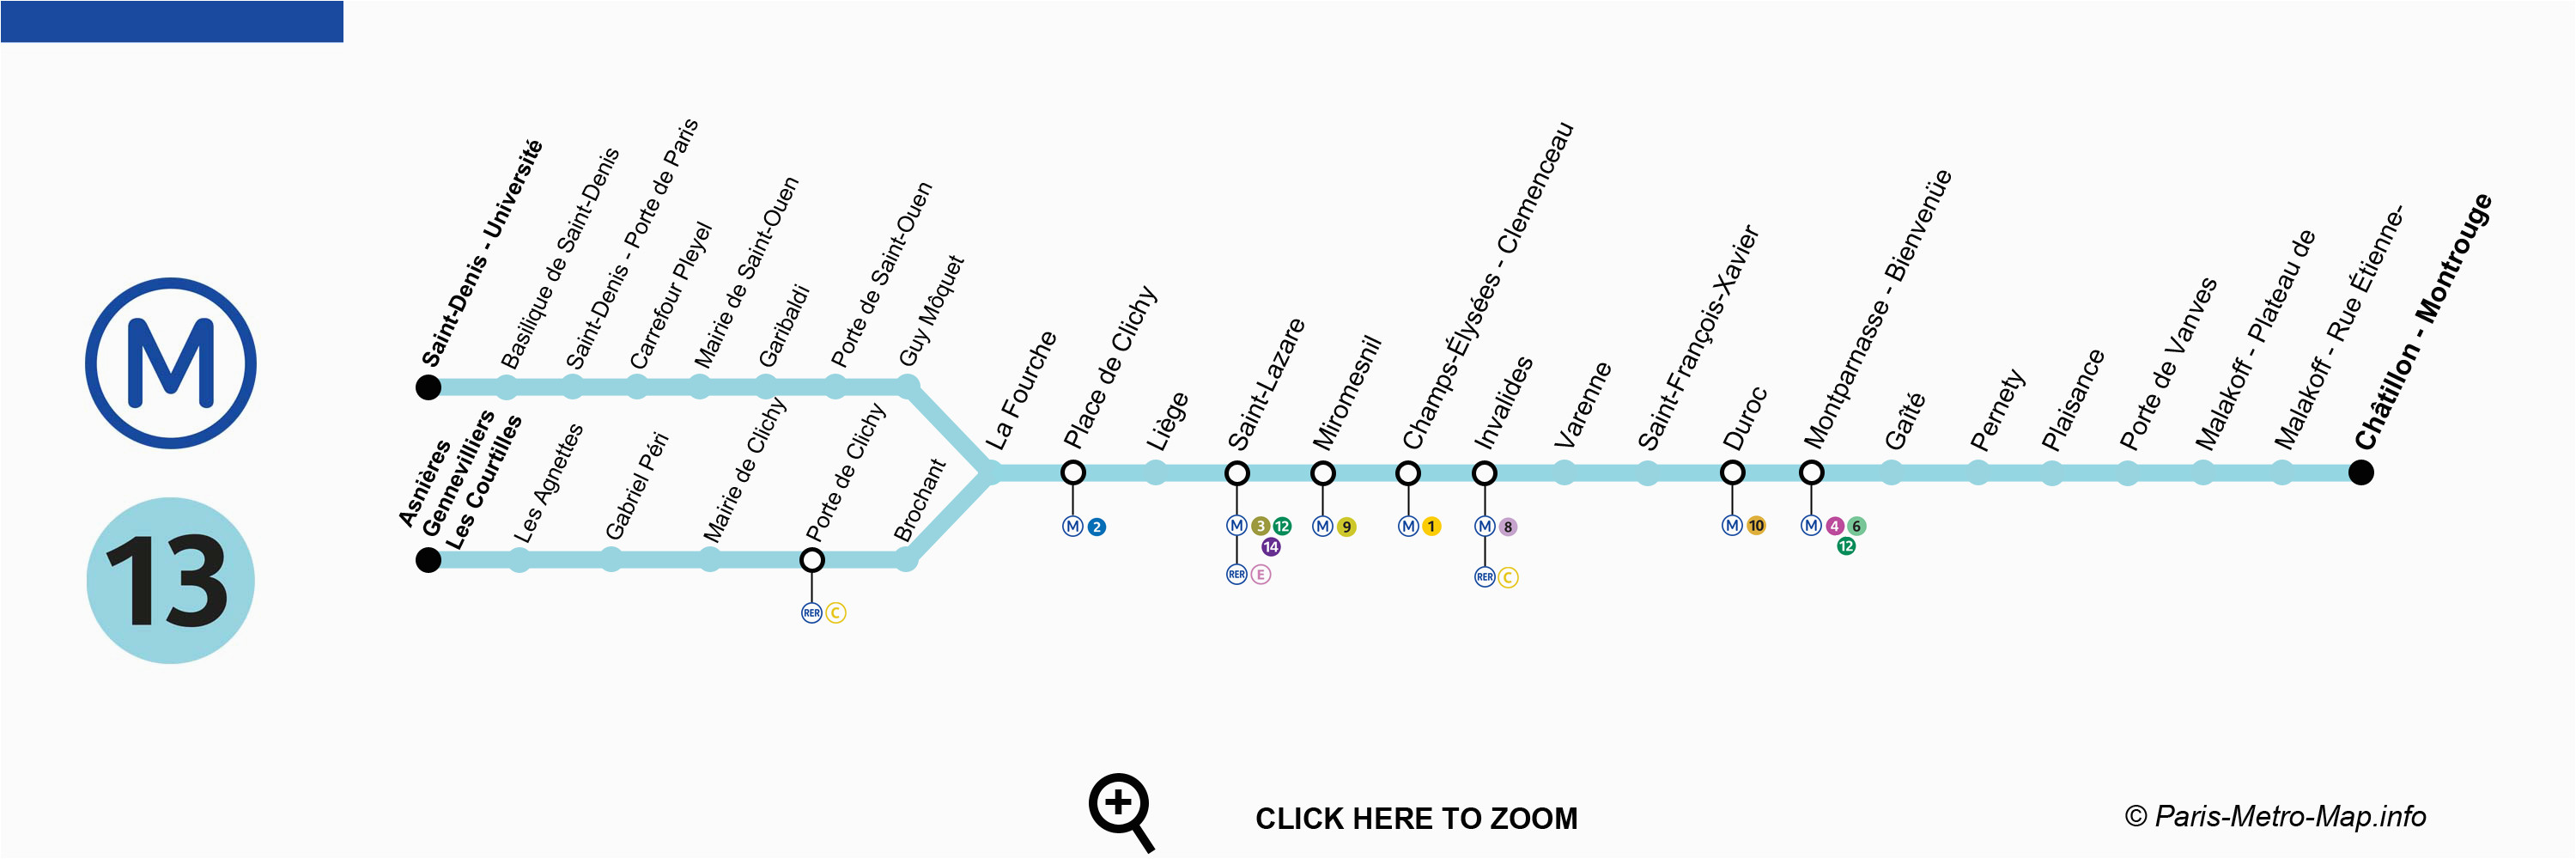 paris metro line 13 map schedule ticket stations tourist info